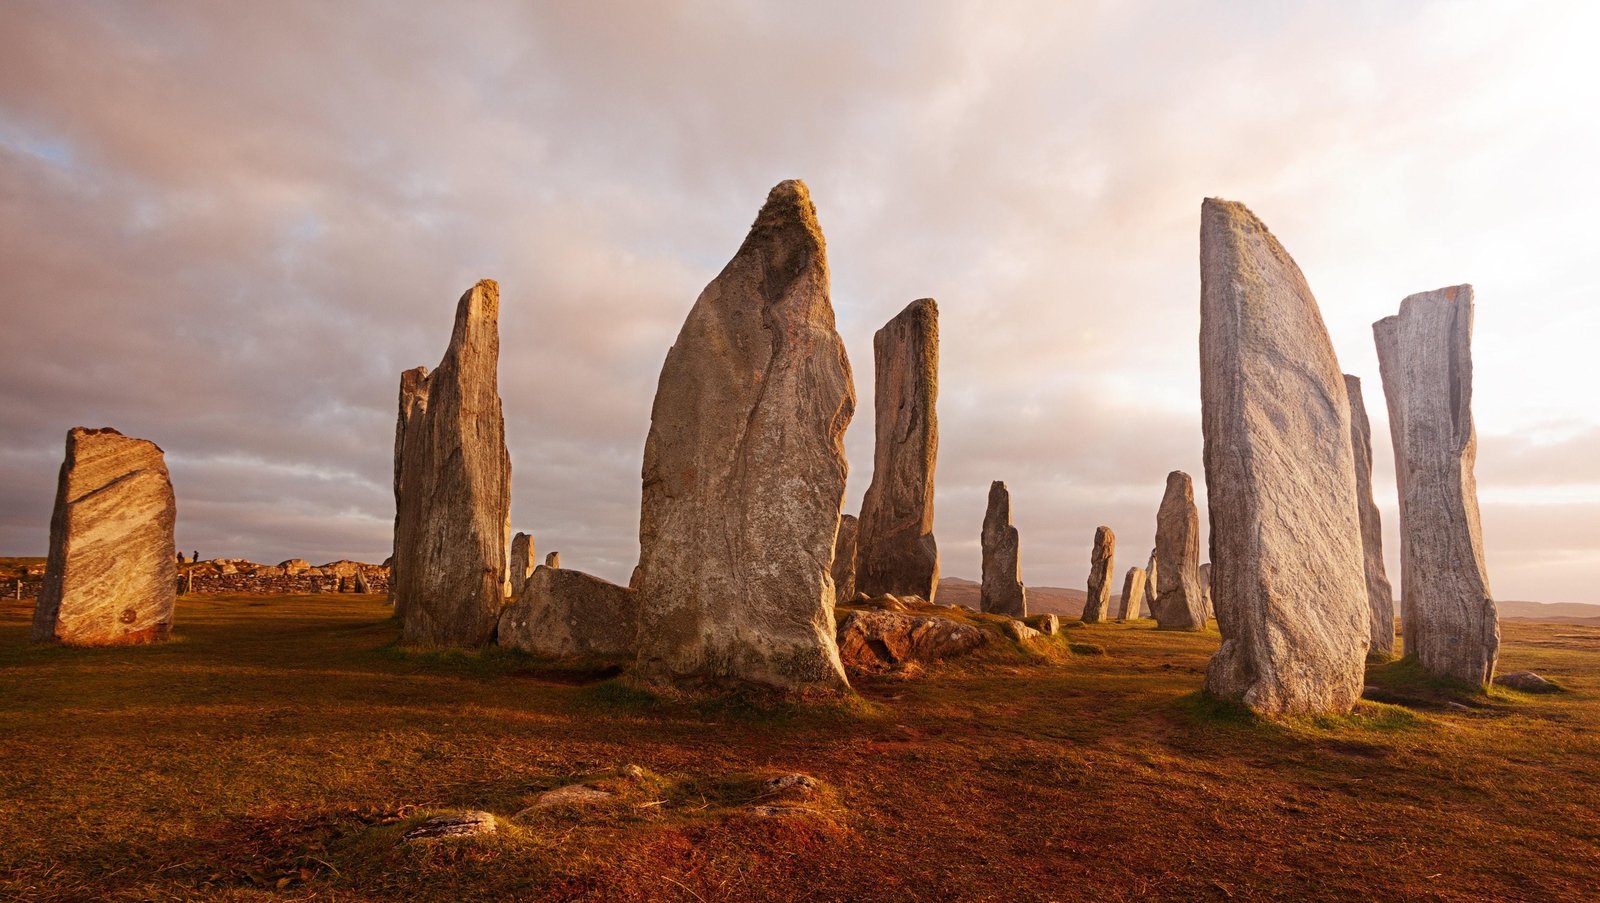 Winter Solstice: Here are 6 stone circles around Europe